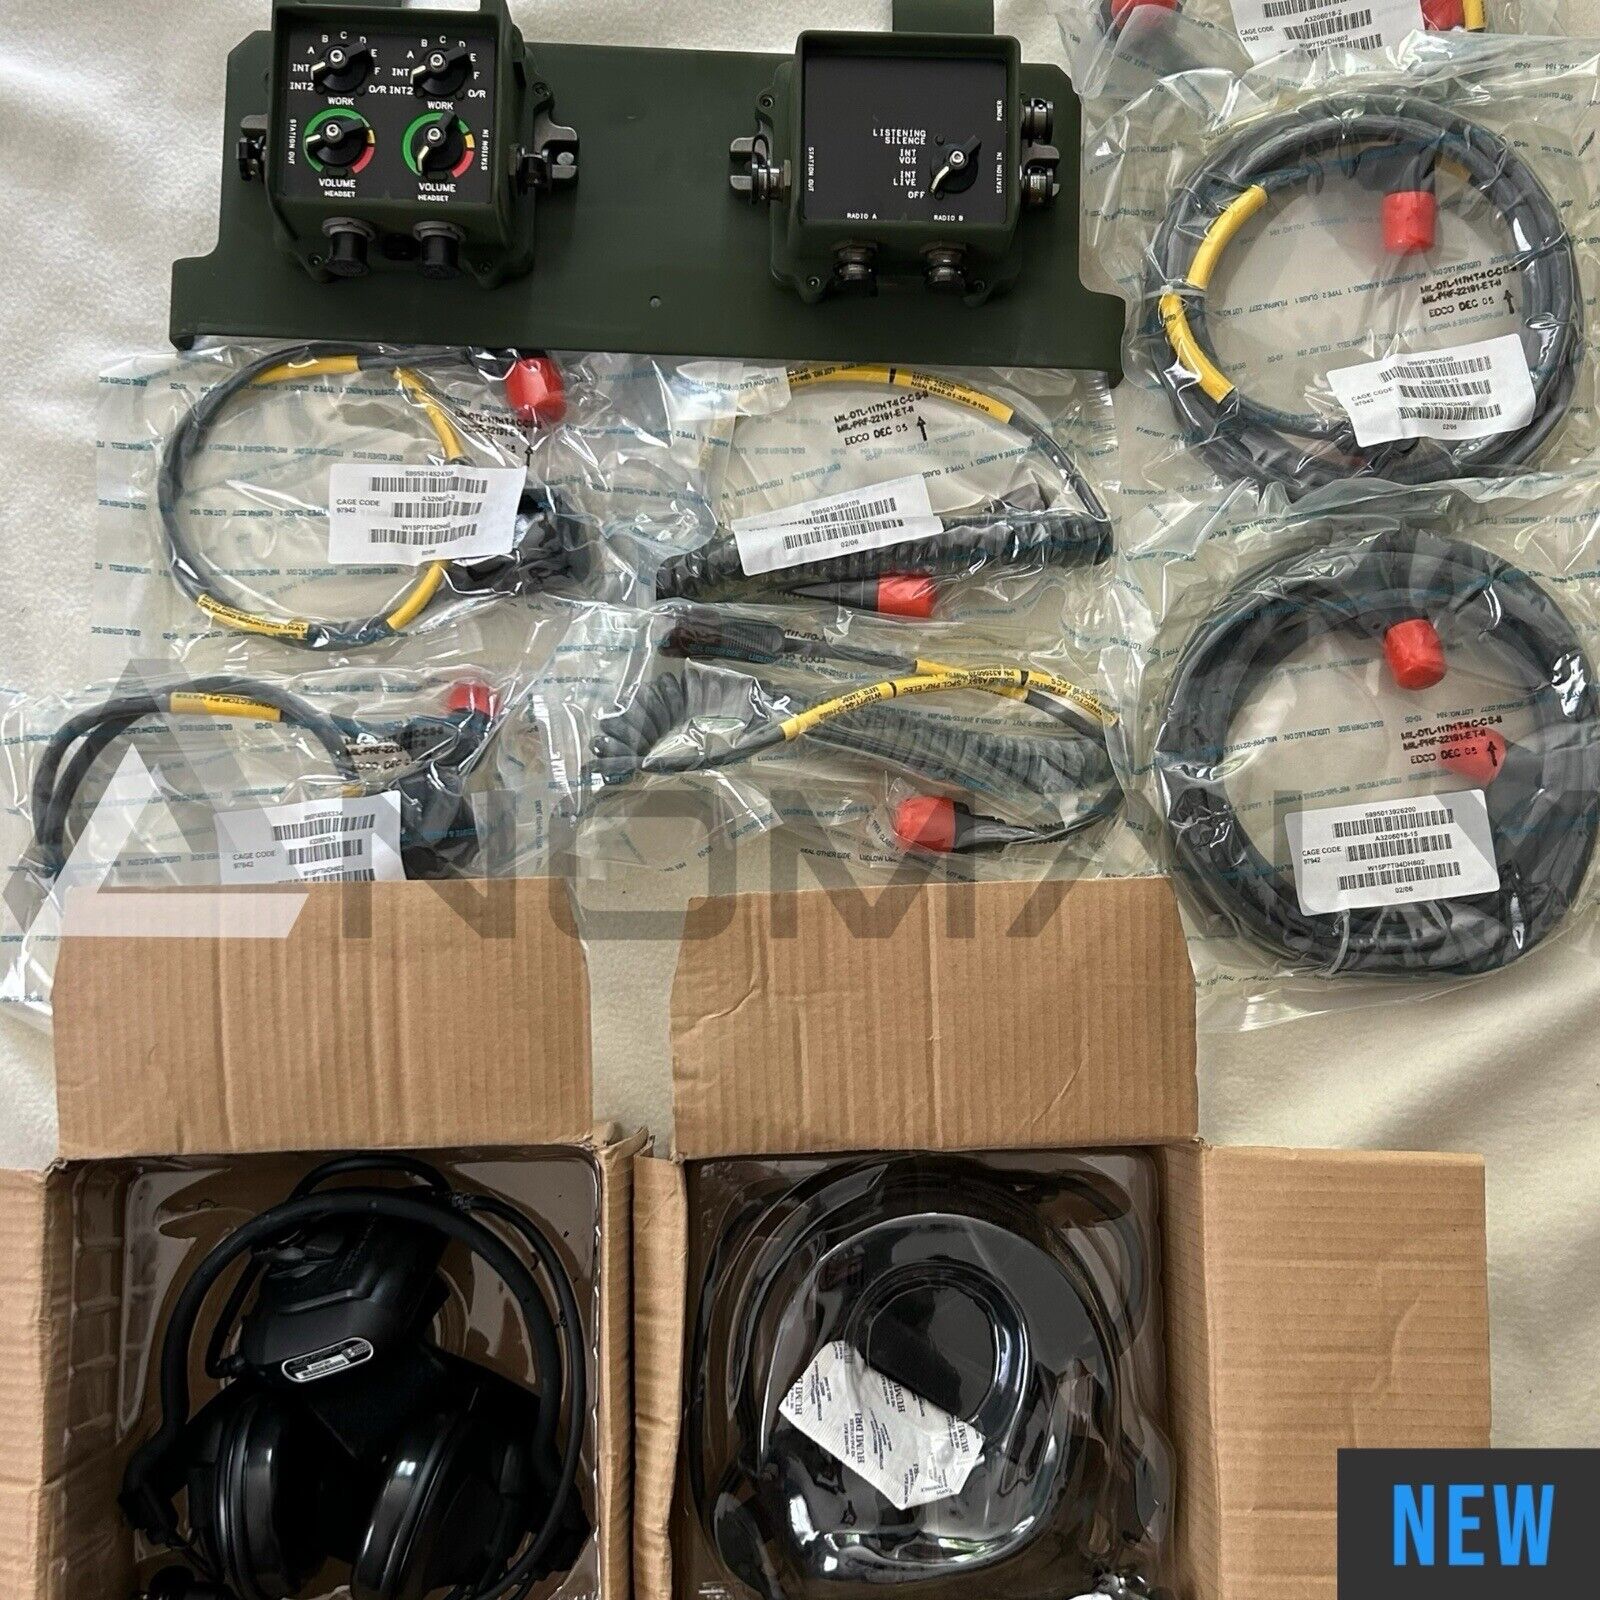 *NEW* VIC-3 Lite Intercom Kit Military Radio SINCGARS for HMMWV, 2 or 4 Man Kit